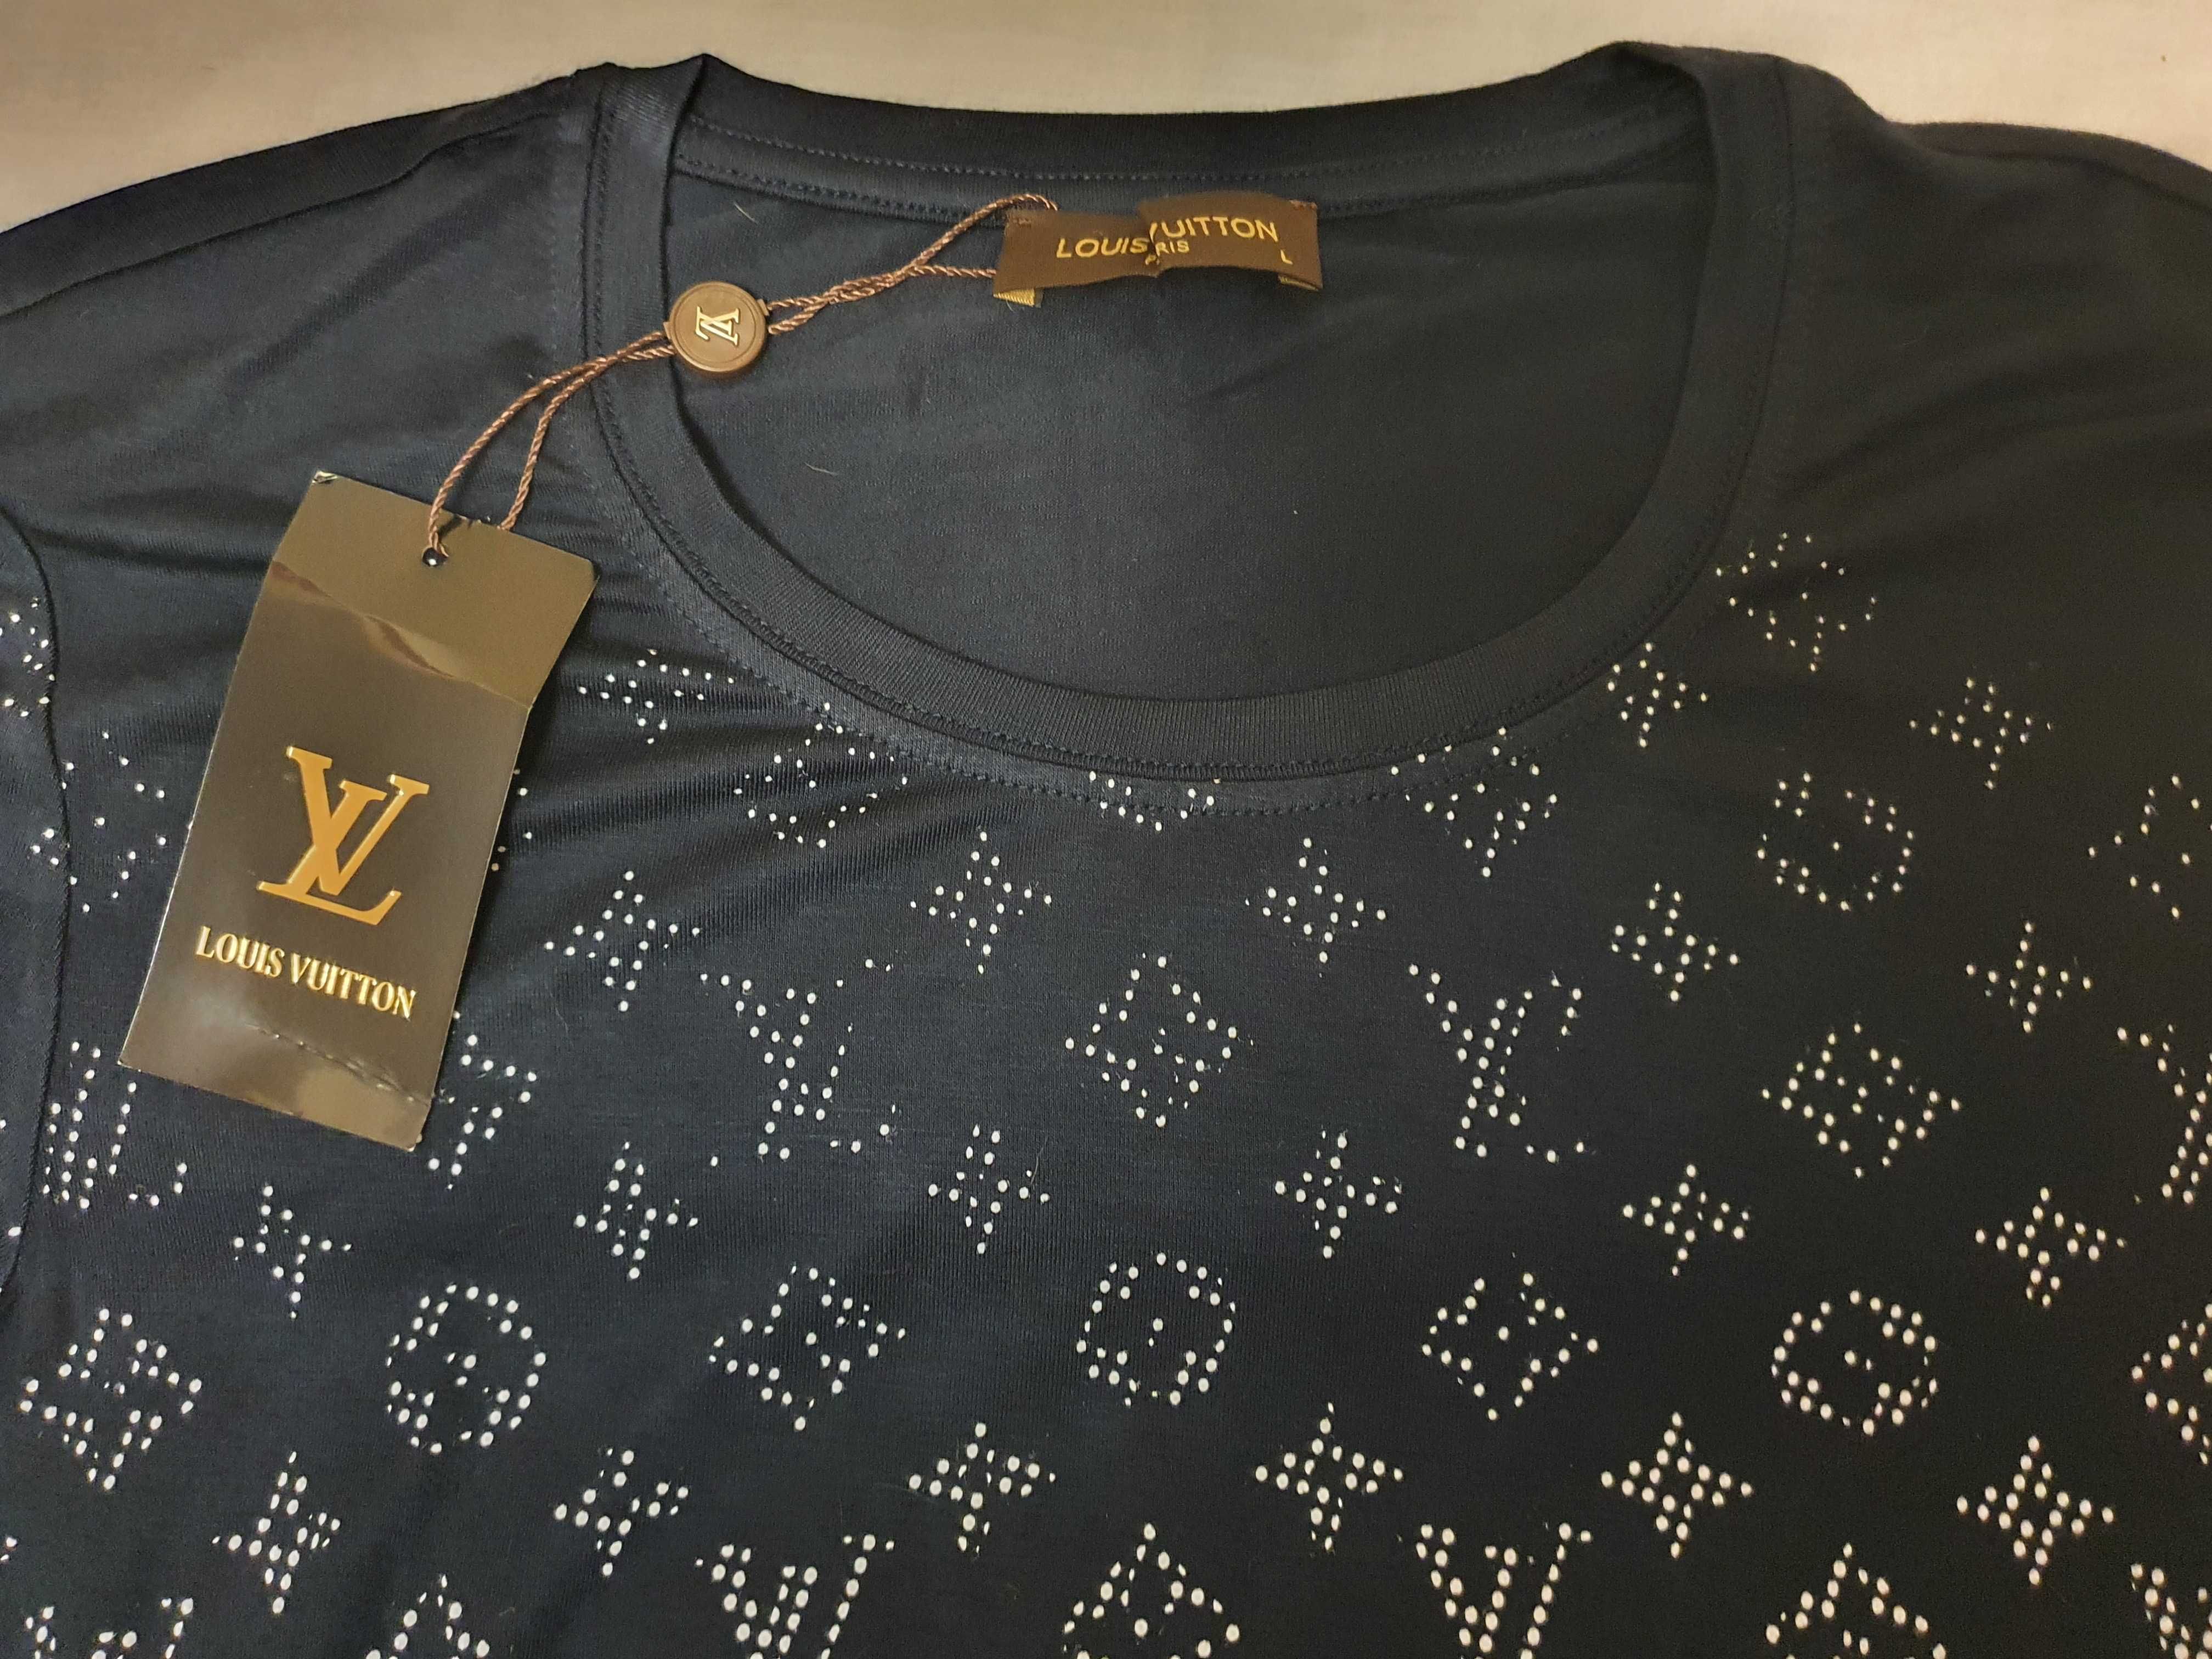 NOWA koszulka damska Louis Vuitton L t-shirt LV piękna lekka na lato